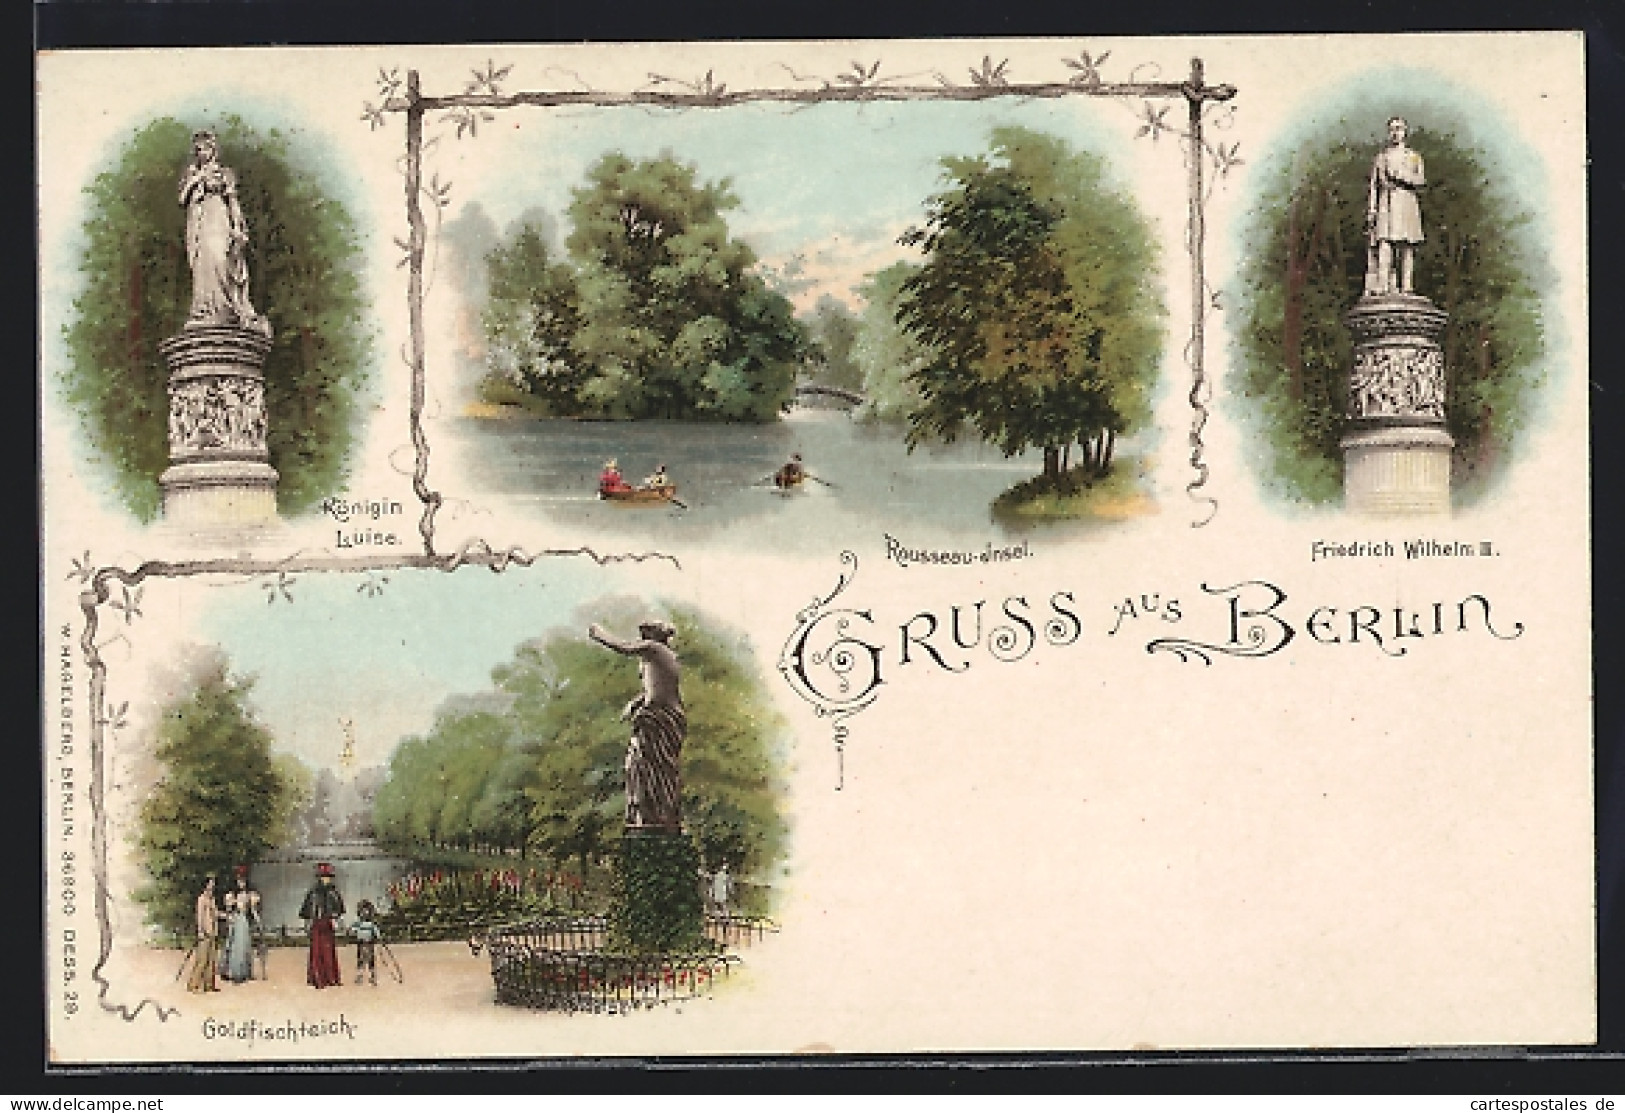 Lithographie Berlin-Tiergarten, Königin Louise-Denkmal, Friedrich Wilhelm III.-Denkmal, Rousseau-Insel, Goldfischteich  - Tiergarten